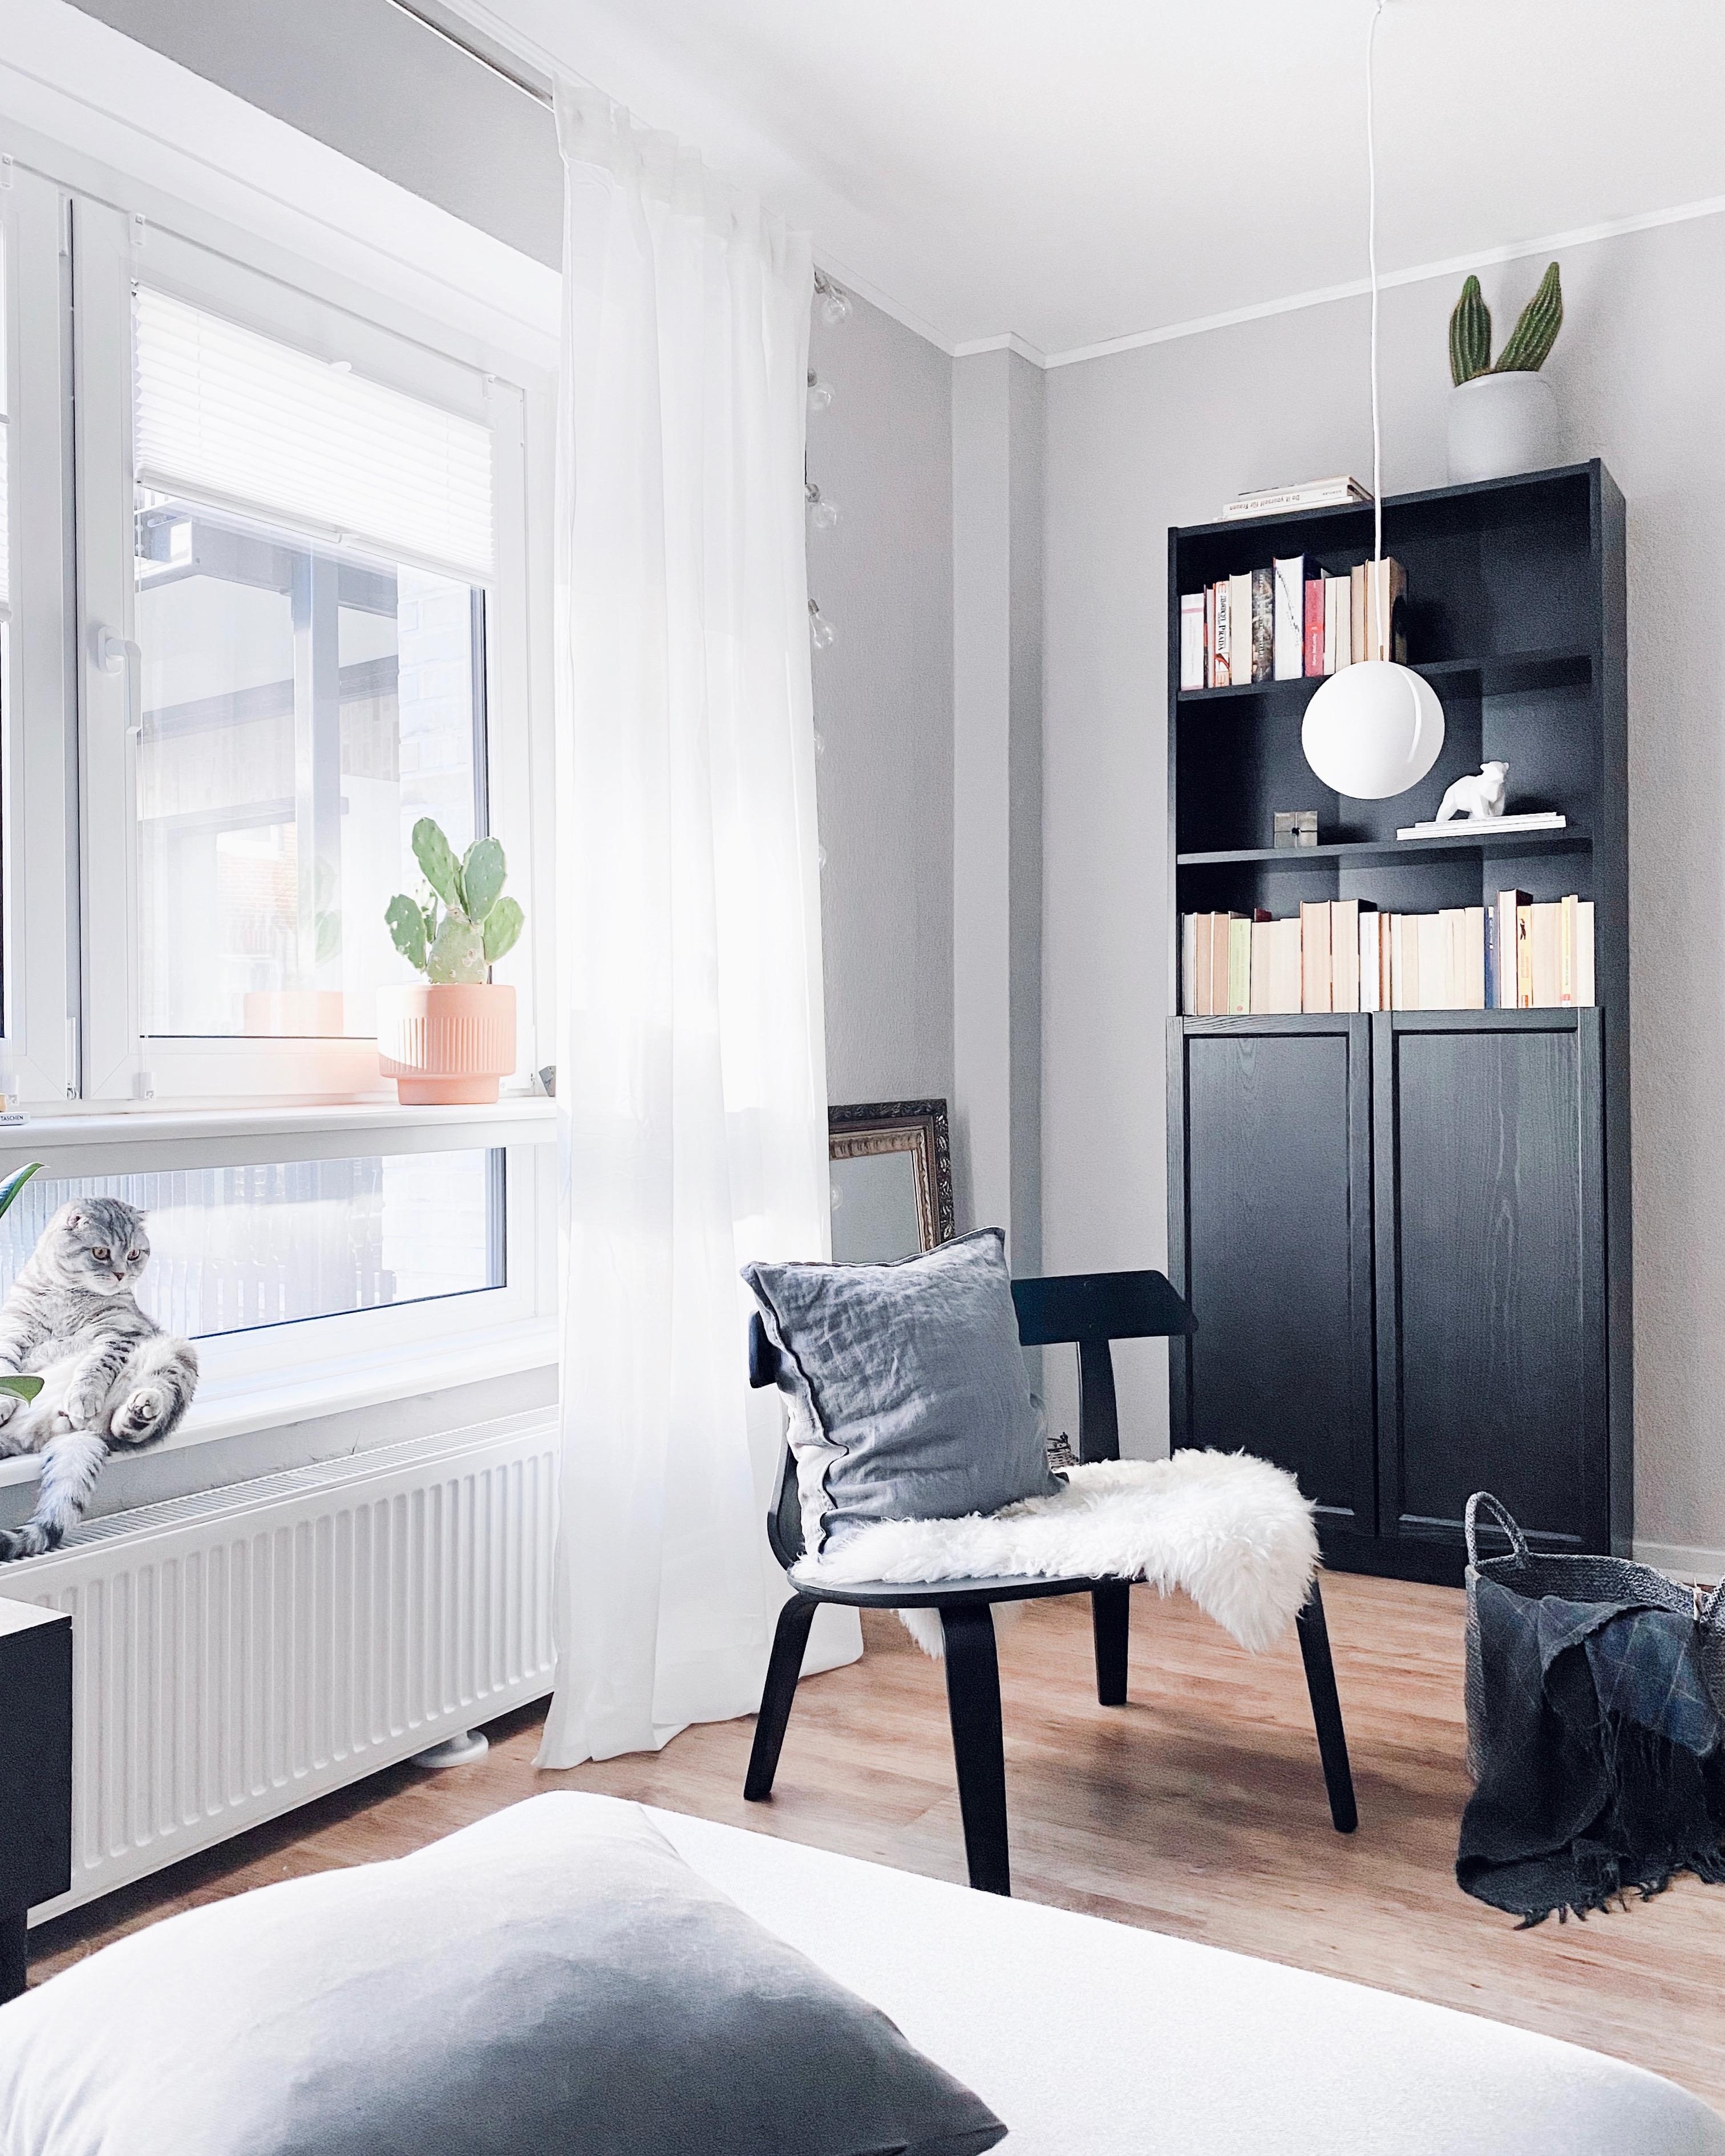 Sunday vibes 🤍
#interior #nordicroom #scandinavianliving #livingroom #chair #catlover #hygge #monochrome #minimalistic 